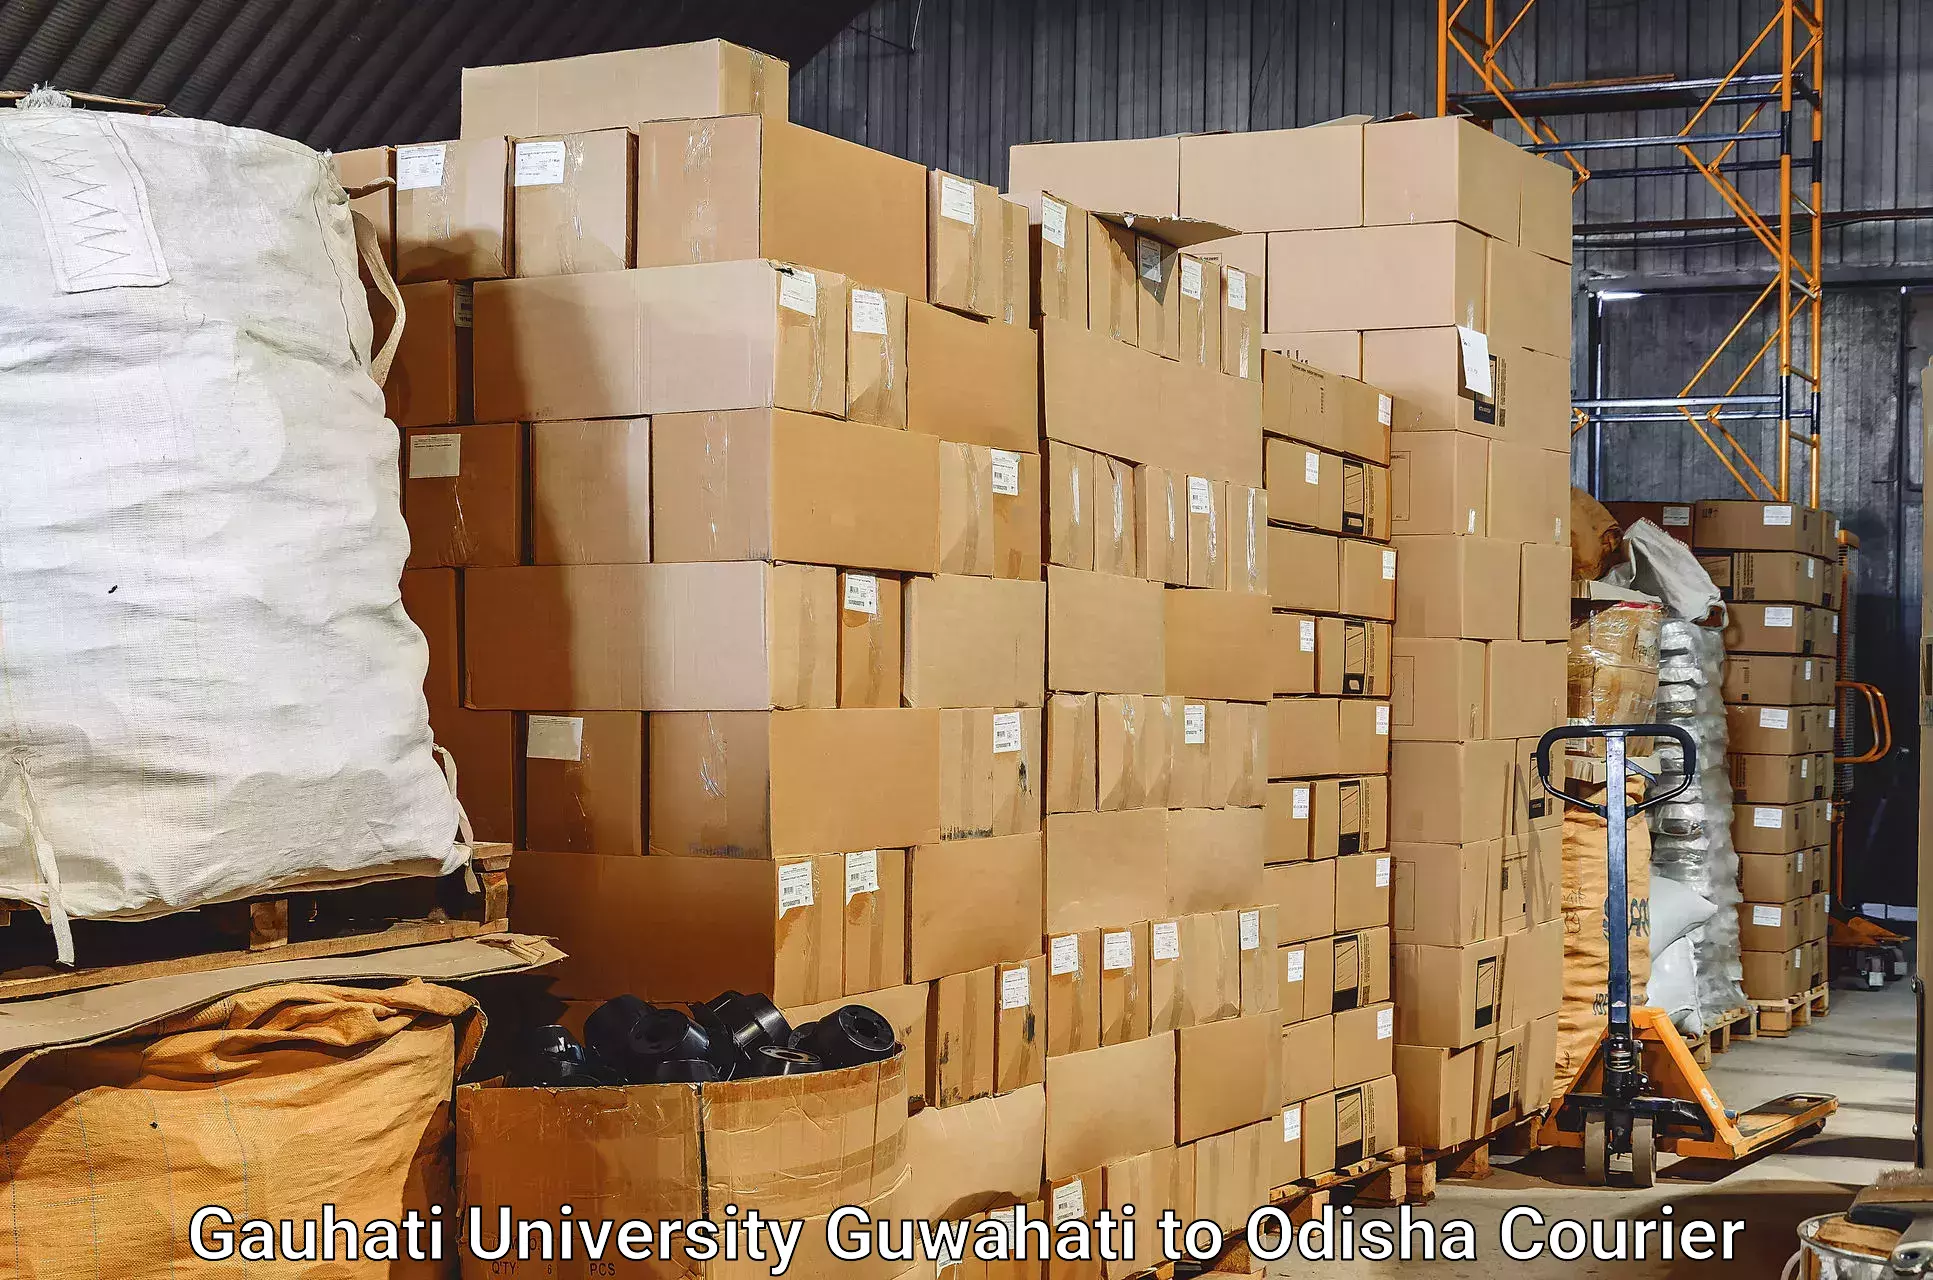 Baggage relocation service Gauhati University Guwahati to Jeypore